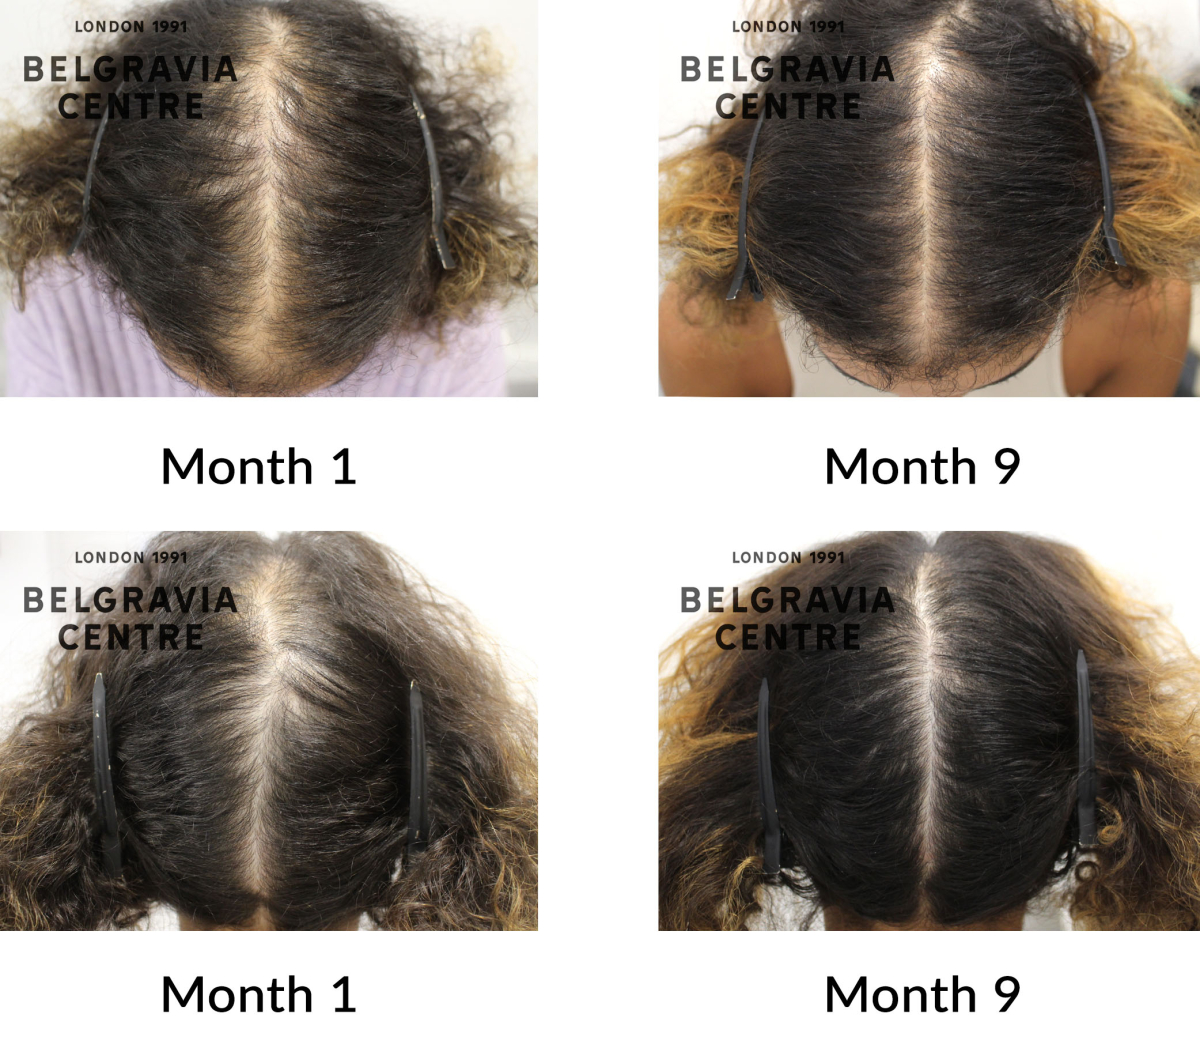 female pattern hair loss the belgravia centre 429943